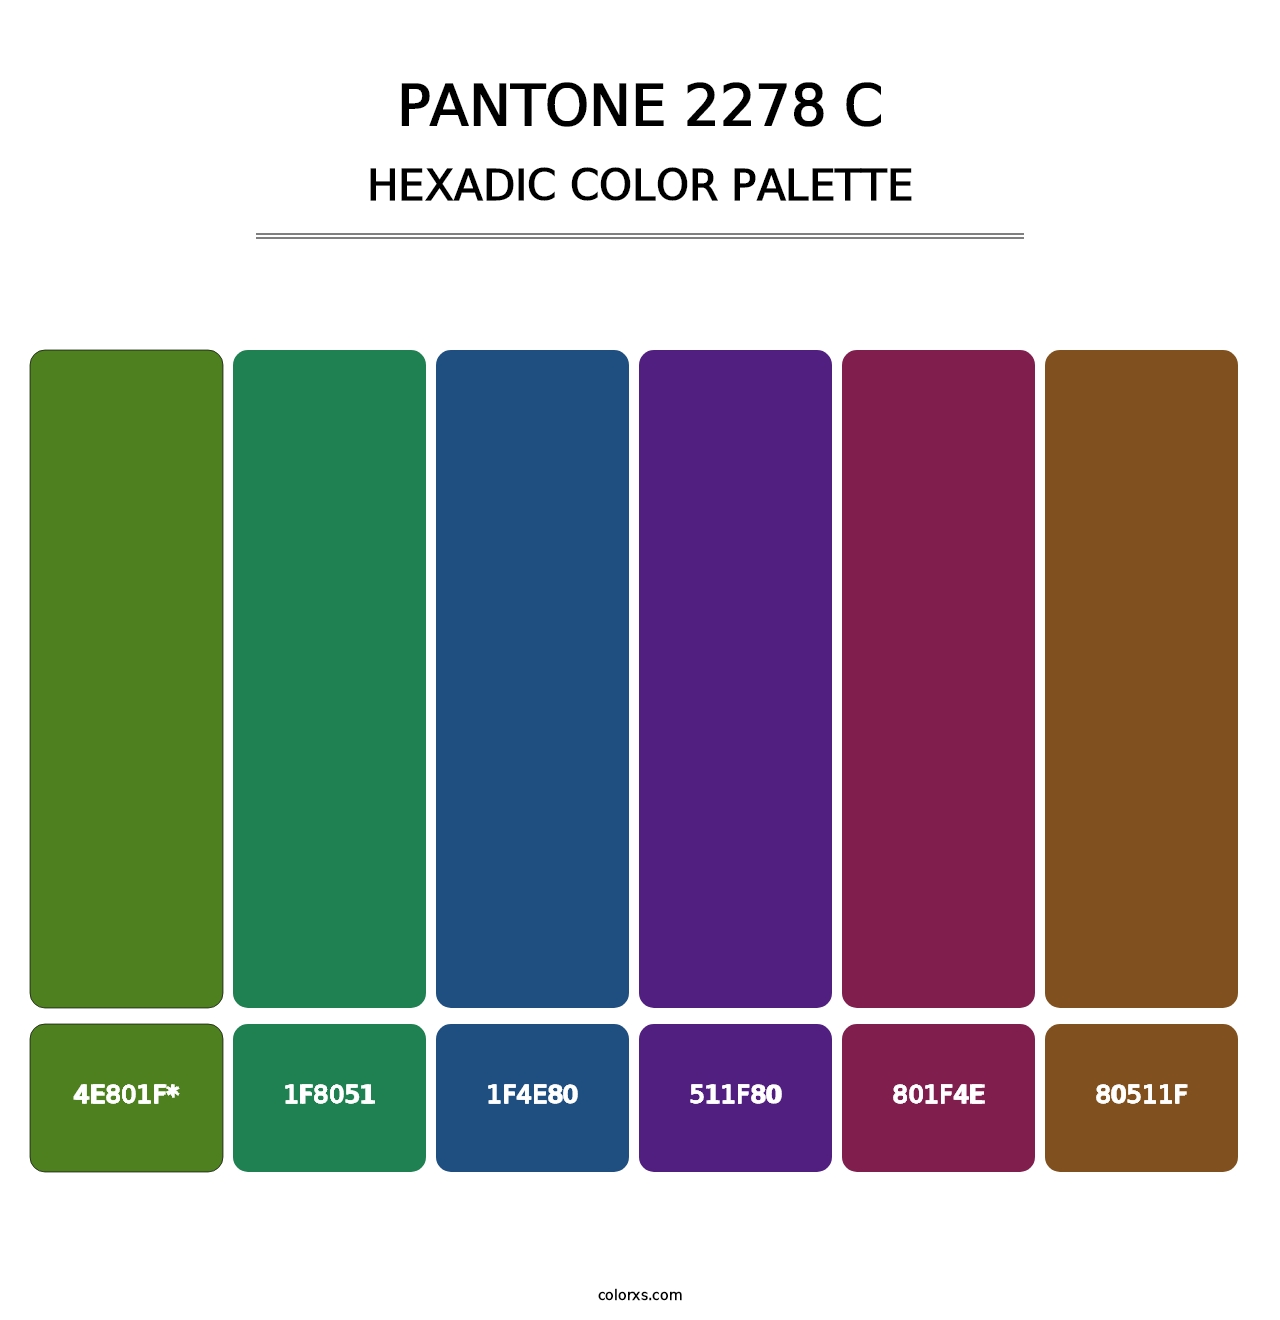 PANTONE 2278 C - Hexadic Color Palette